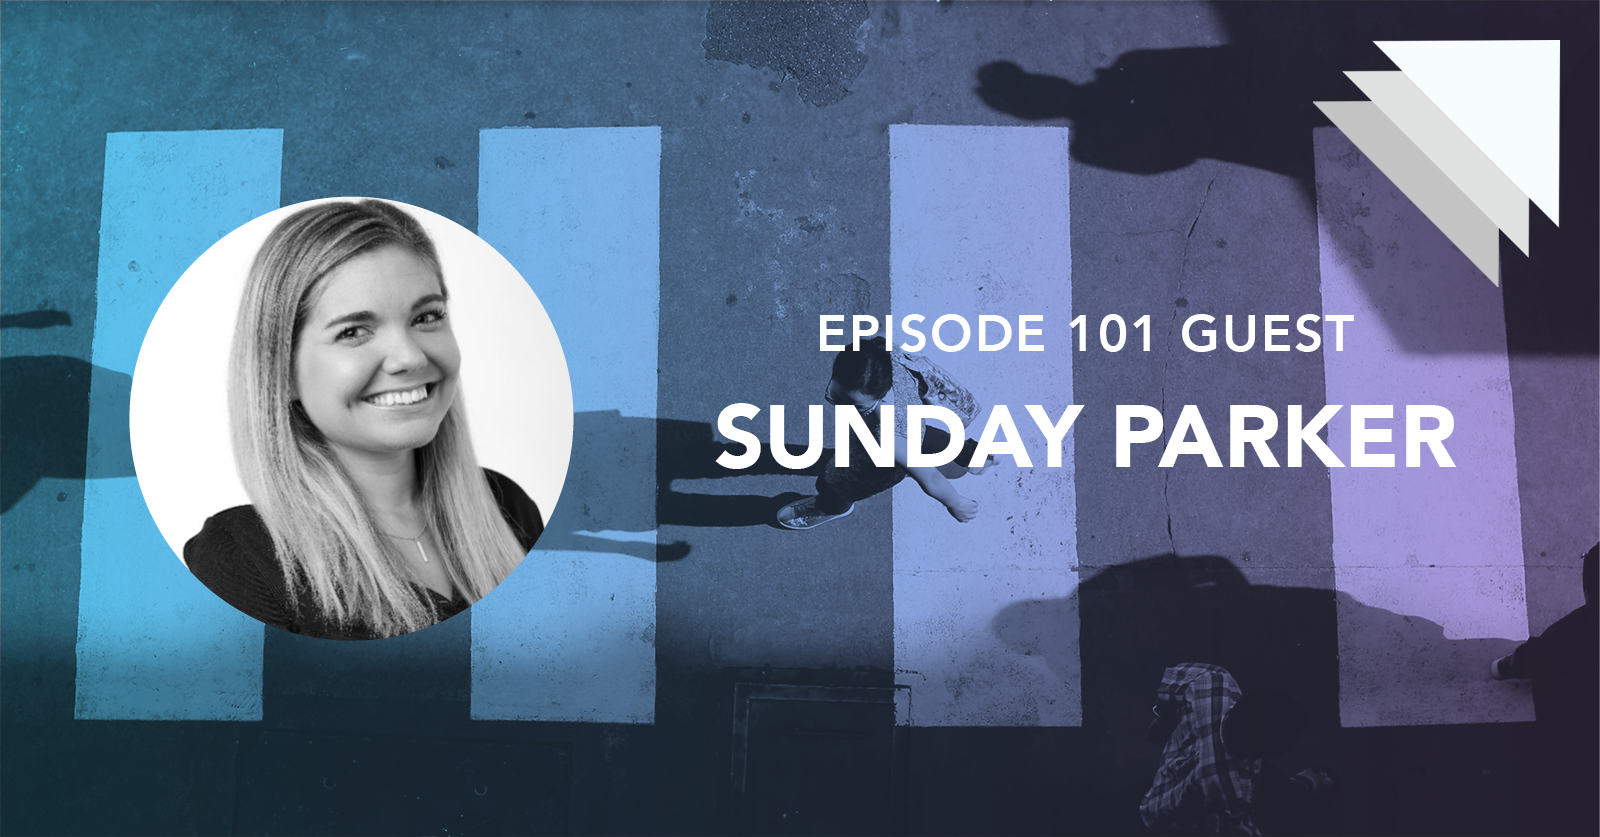 Episode 101 guest Sunday Parker